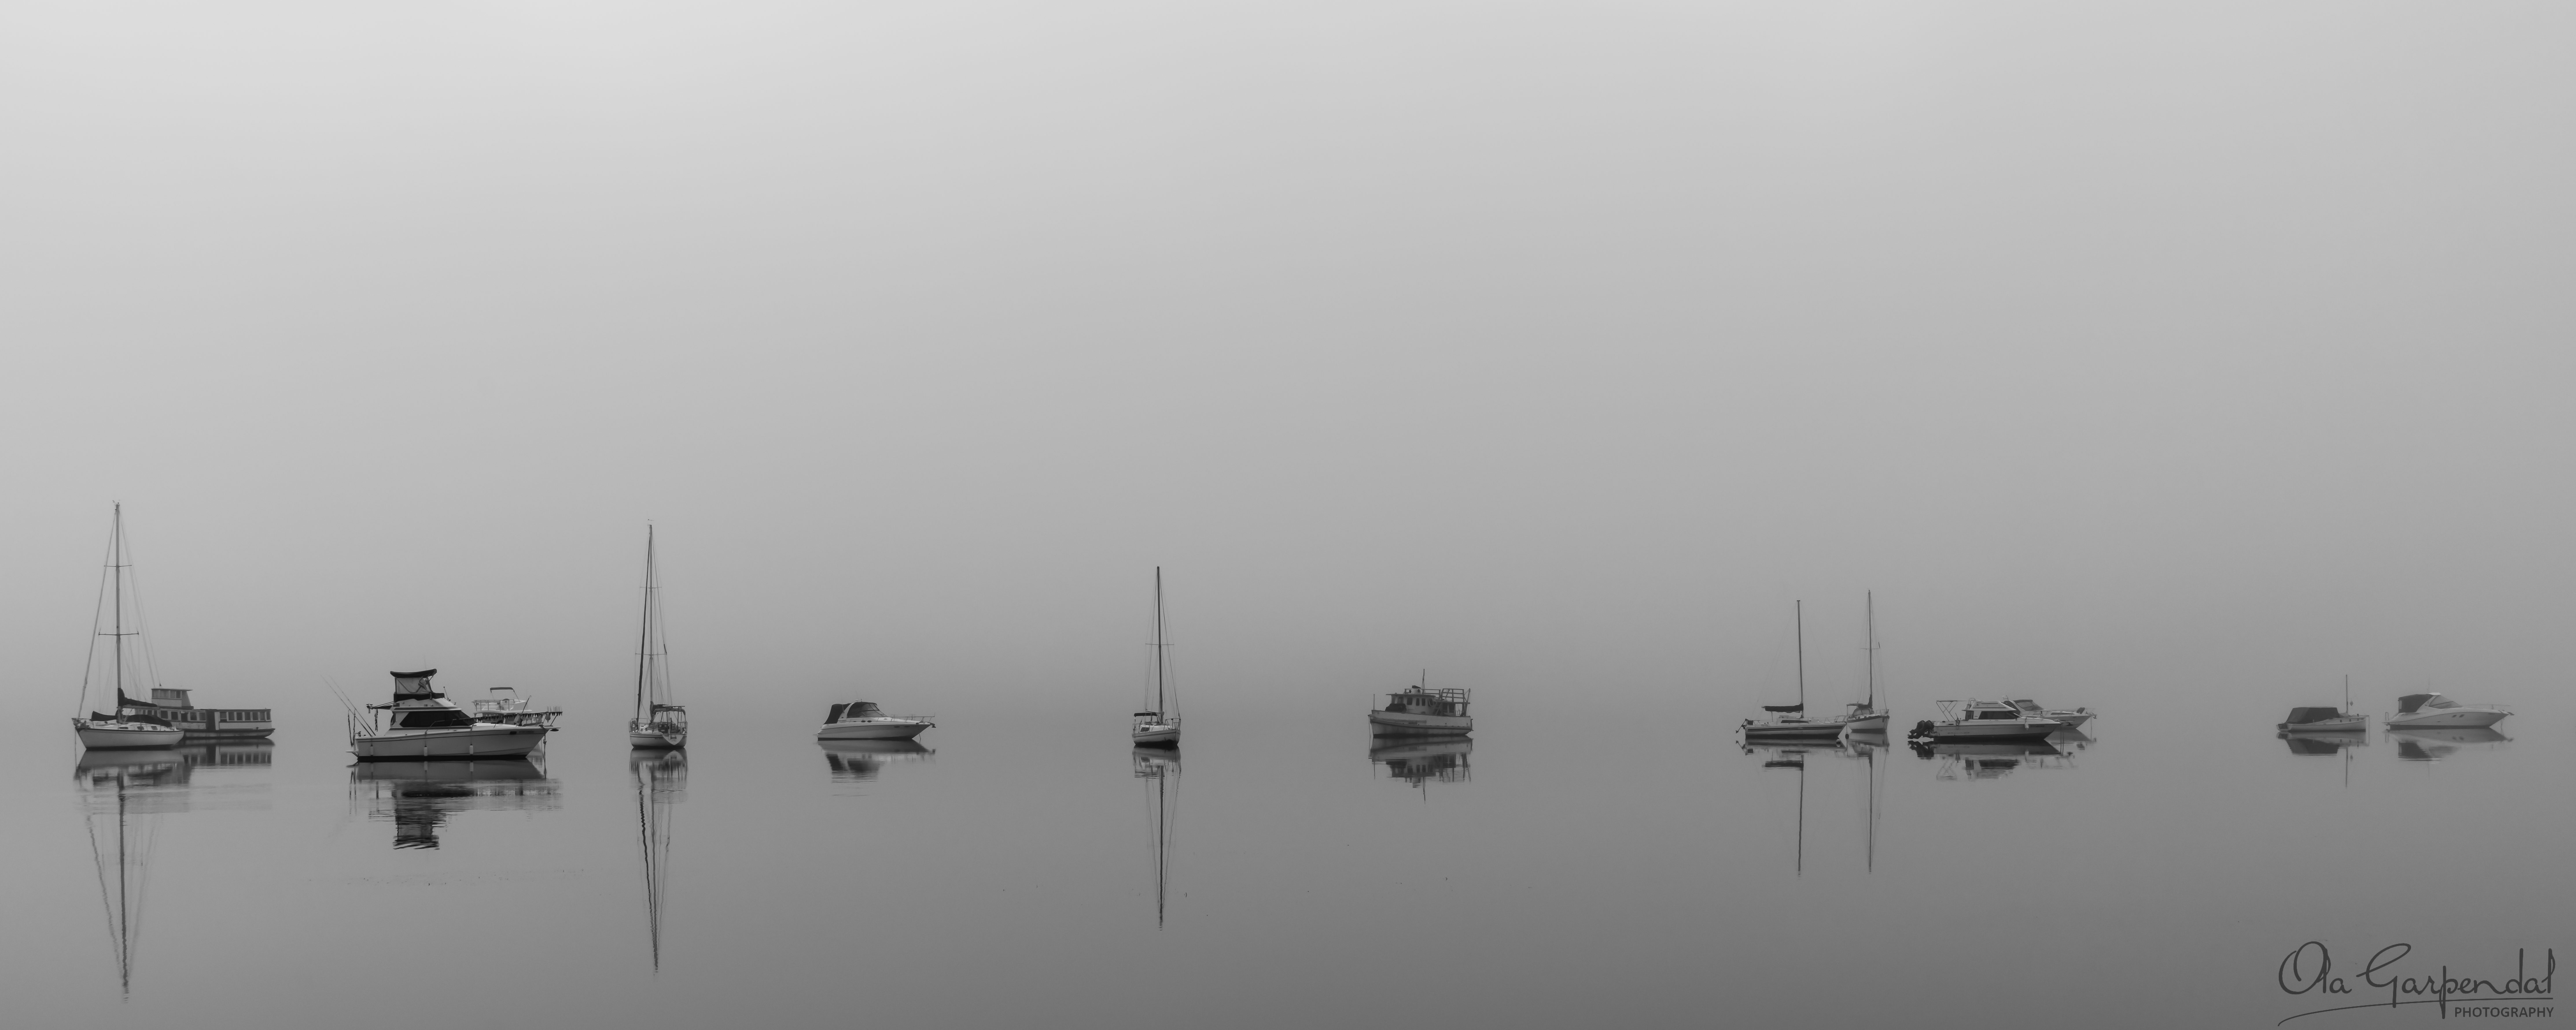 Brisbane Water Fog boats misty grey monochrome